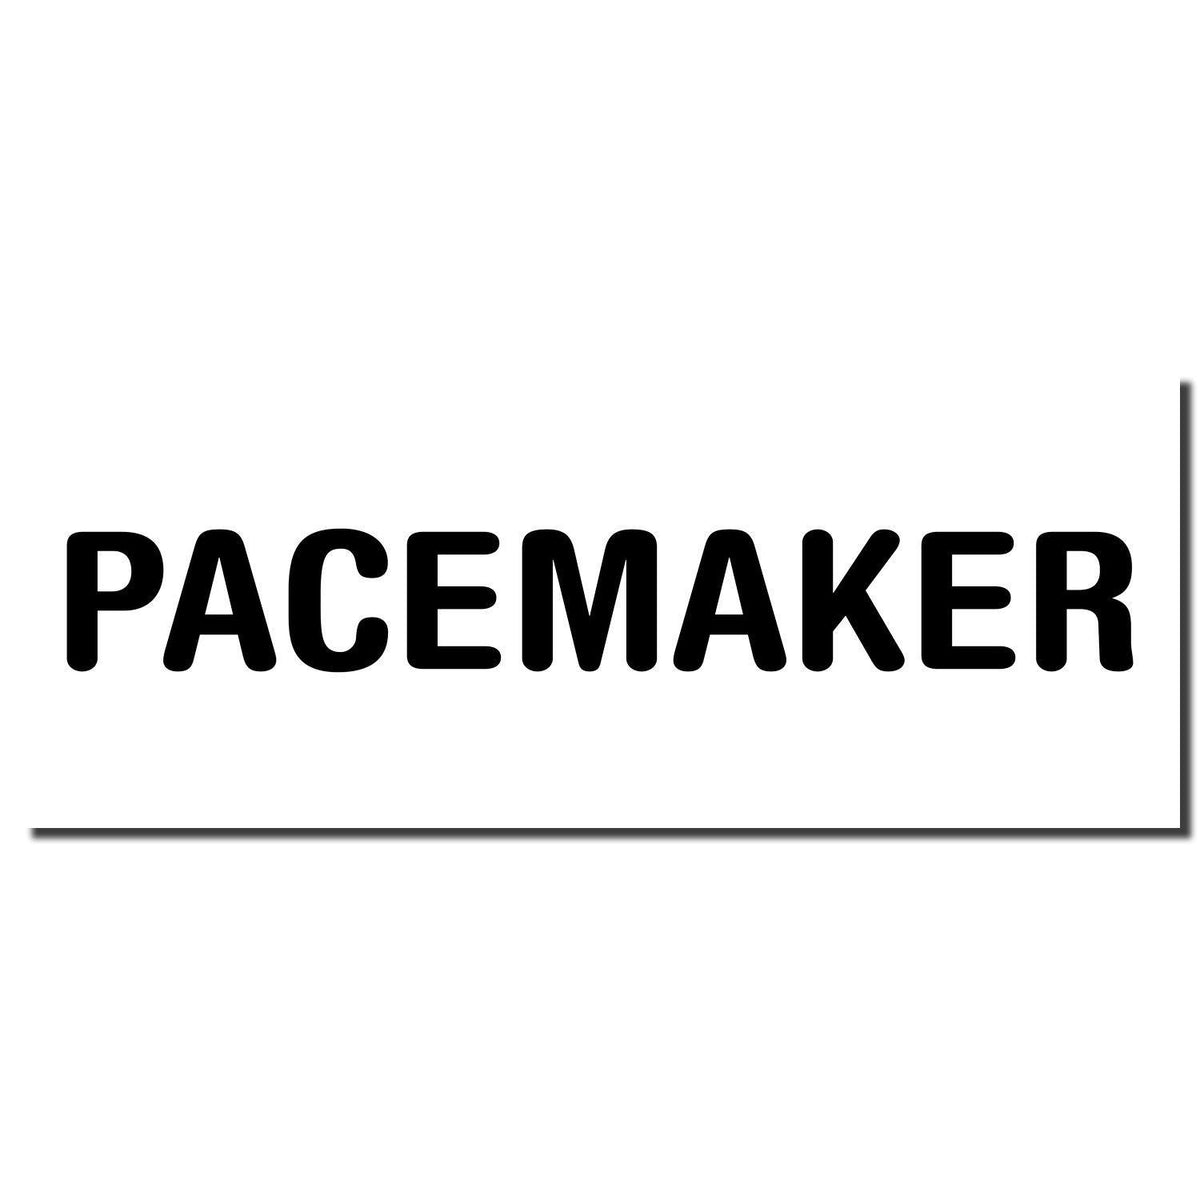 Enlarged Imprint Large Pacemaker Rubber Stamp Sample